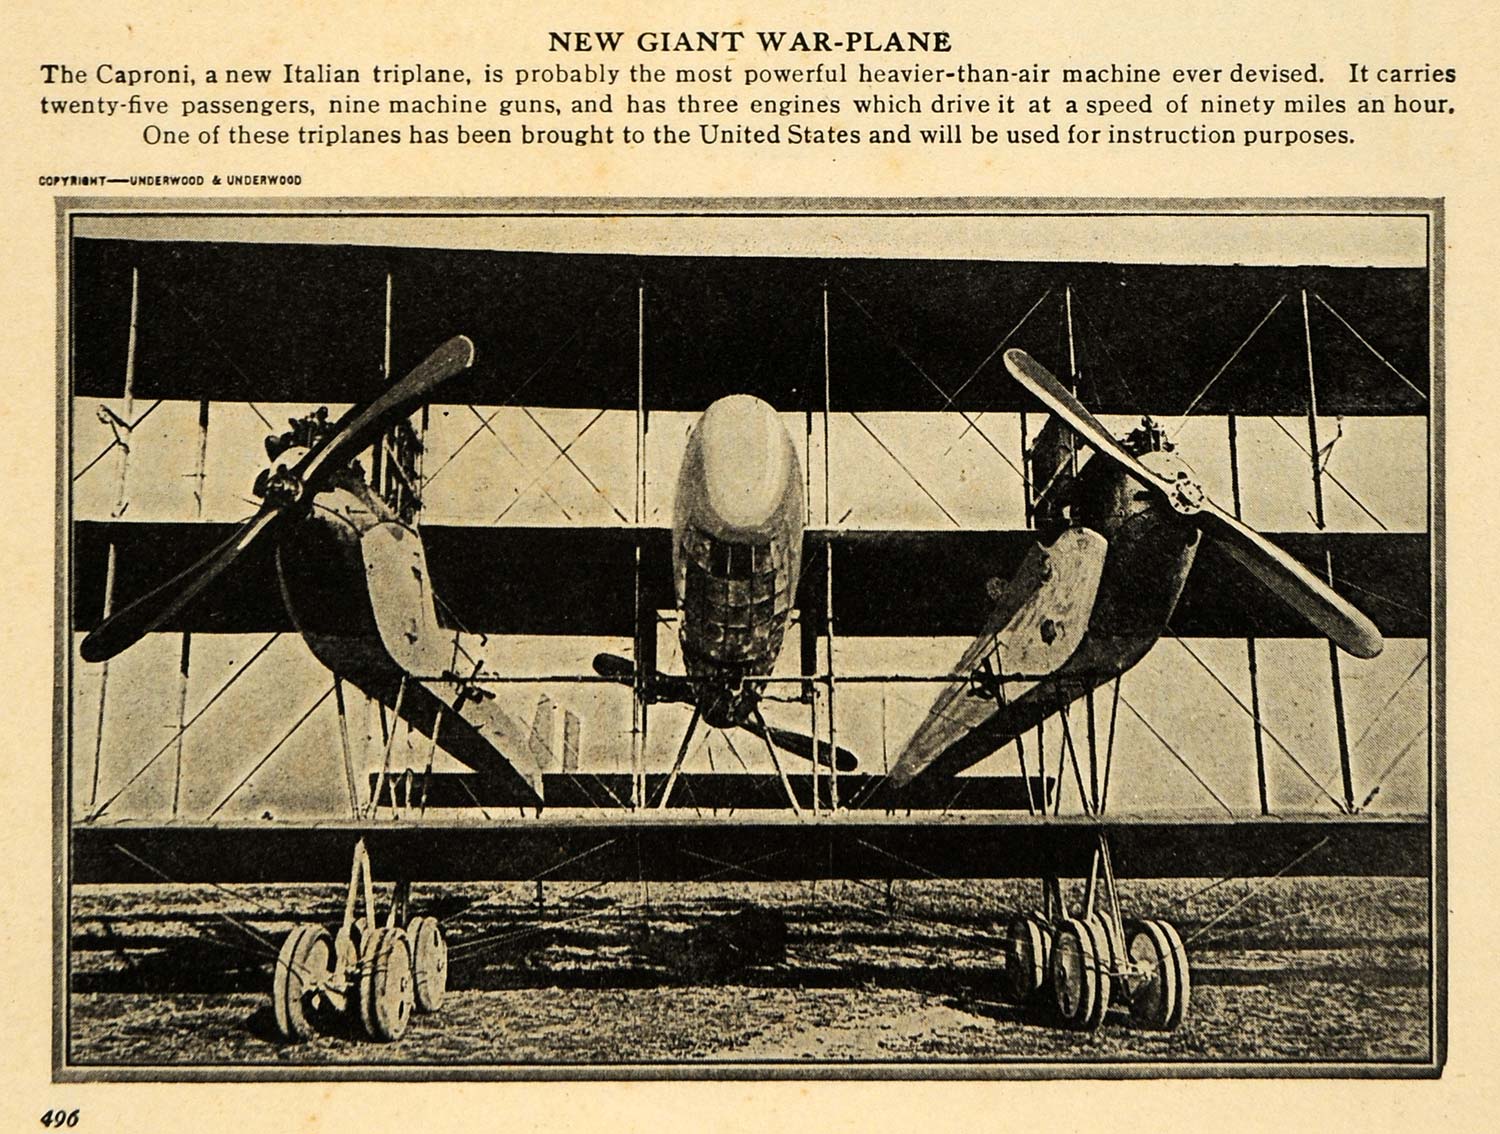 1917 Print Italian Triplane Caproni WWI War Plane - ORIGINAL HISTORIC IMAGE ILW2